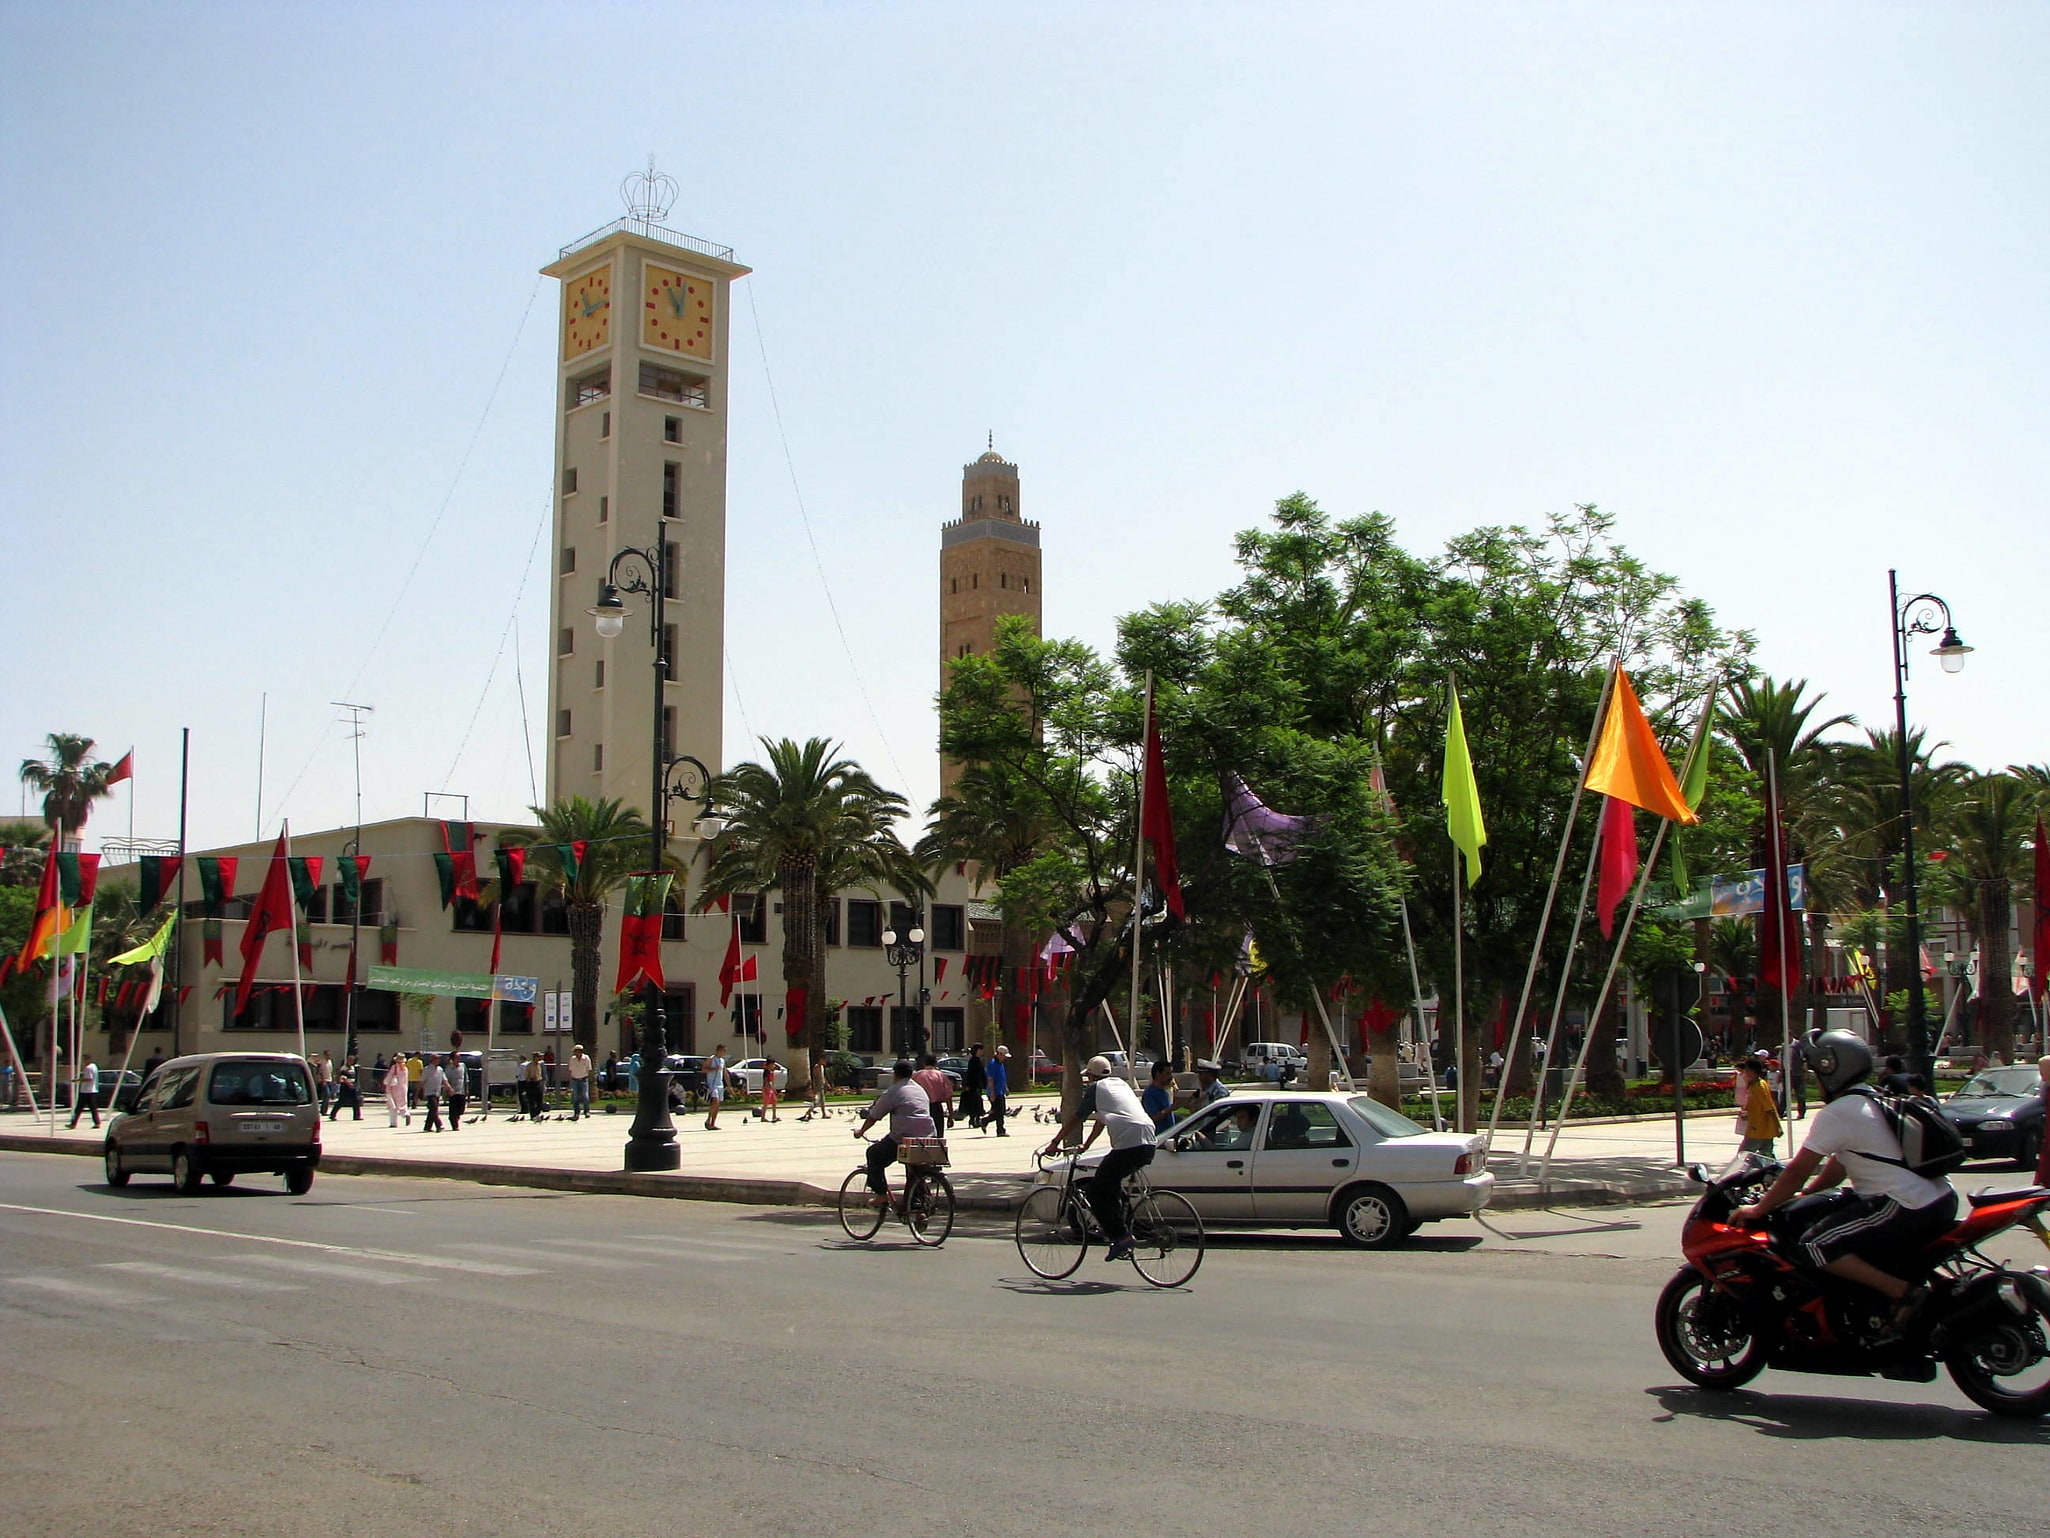 Oujda, Morocco